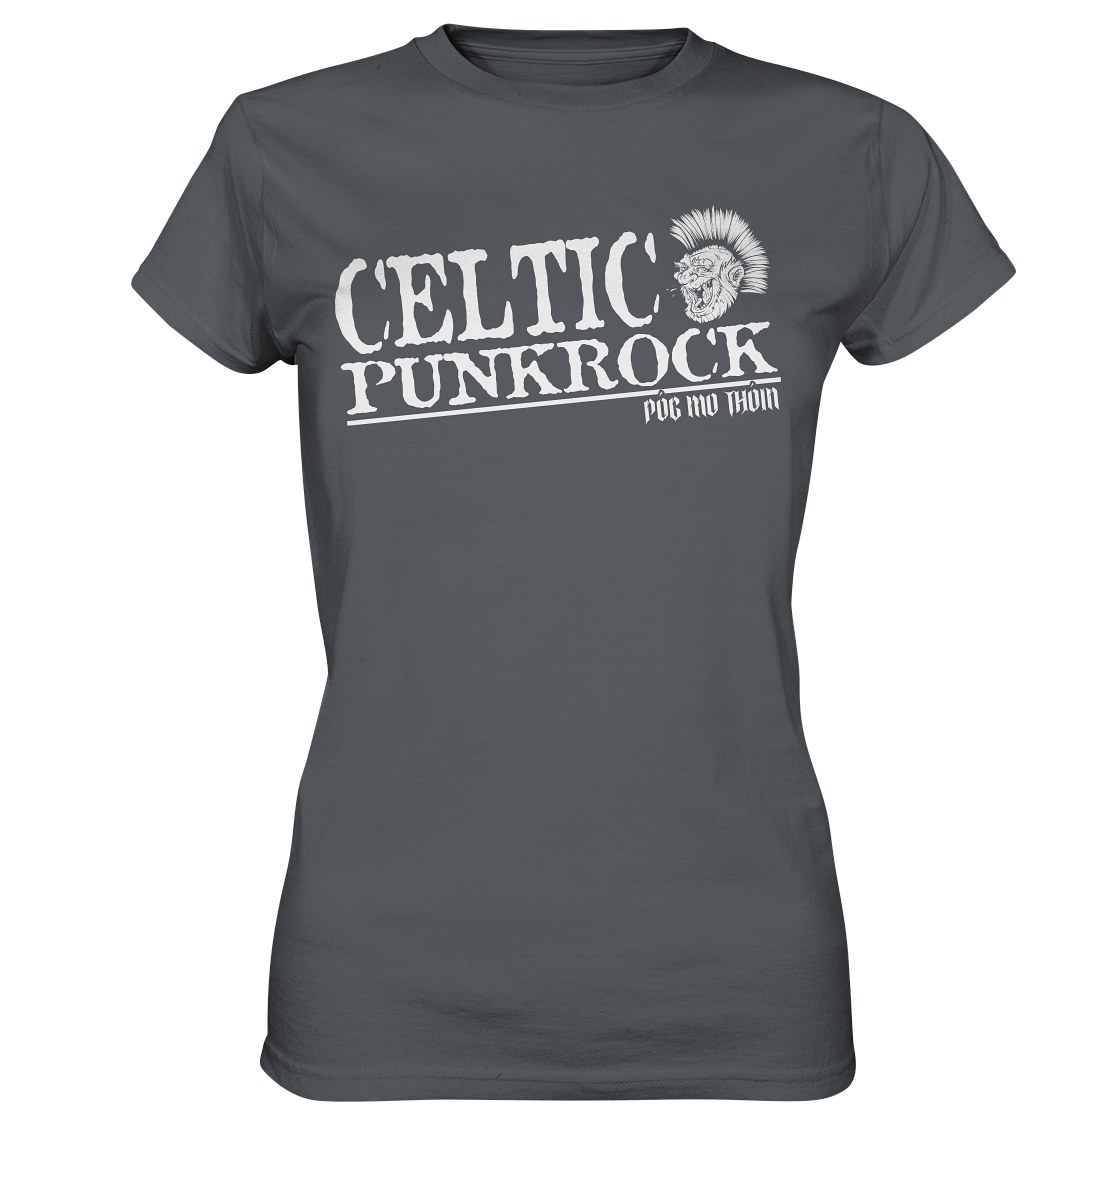 Póg Mo Thóin Streetwear "Celtic Punkrock" - Ladies Premium Shirt